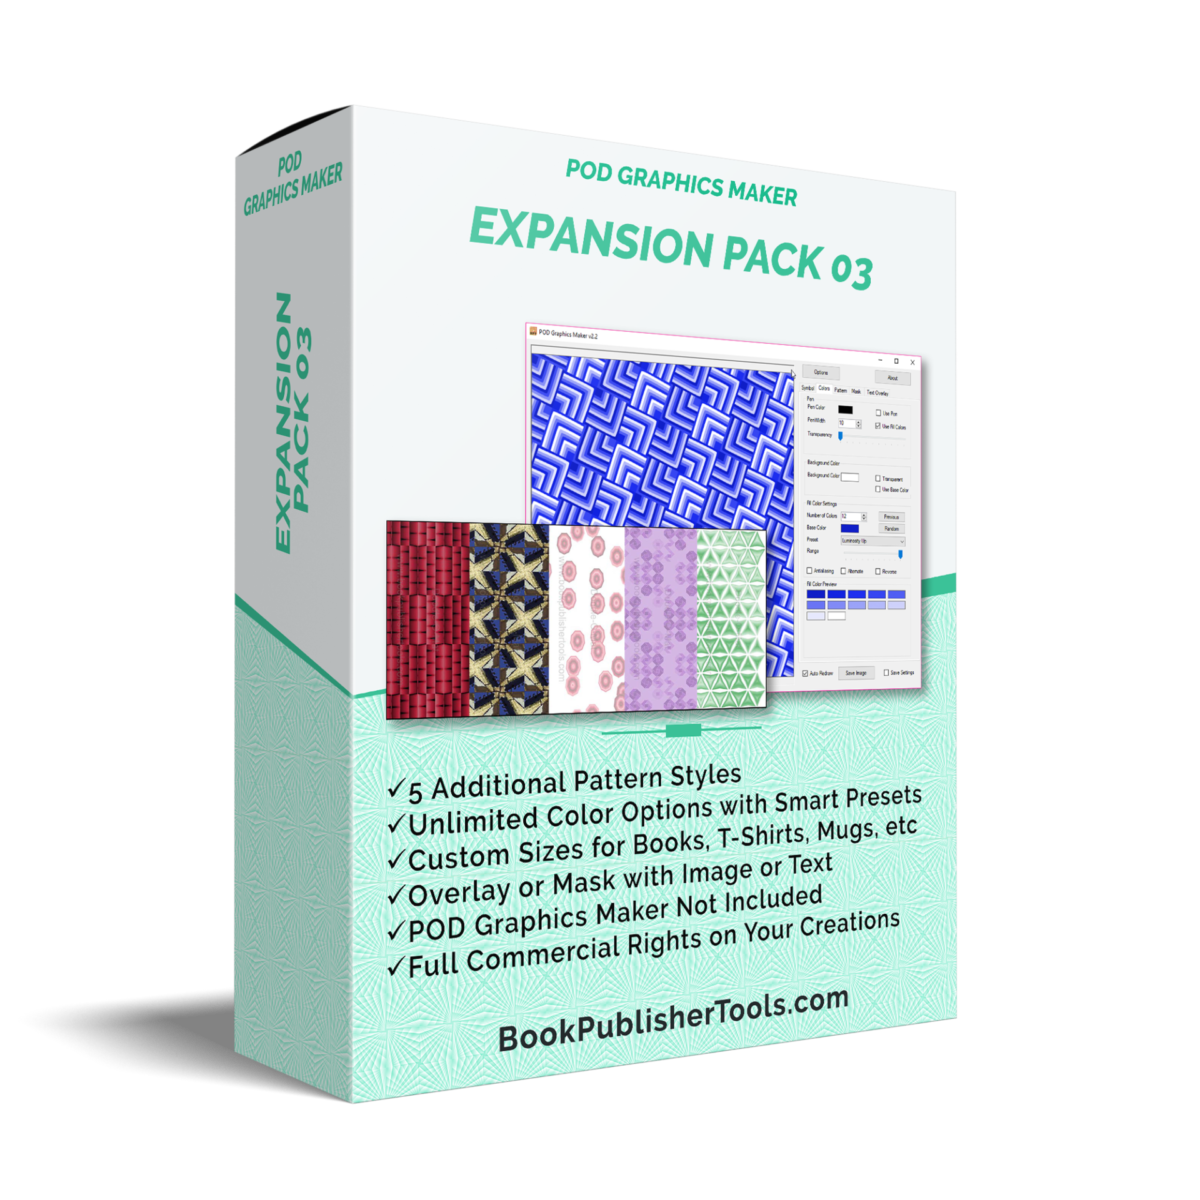 POD Graphics Maker Pack 04 software box